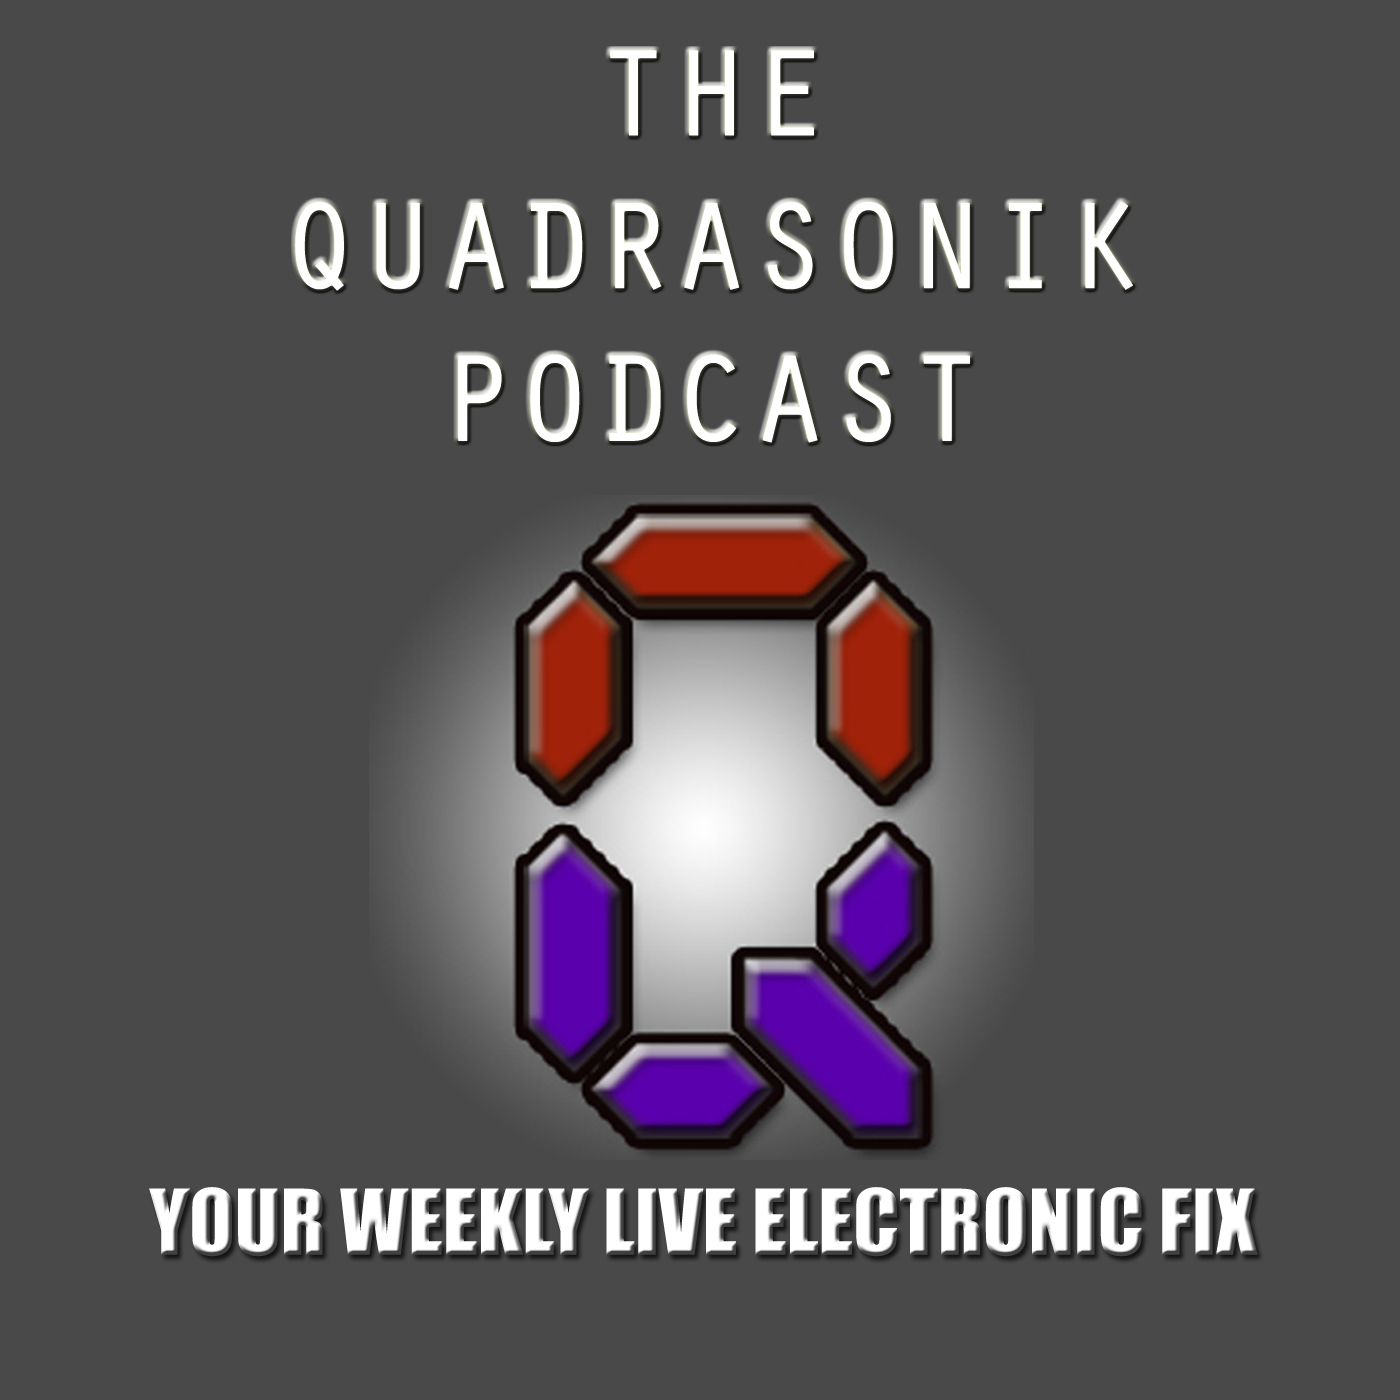 The Quadrasonik Podcast